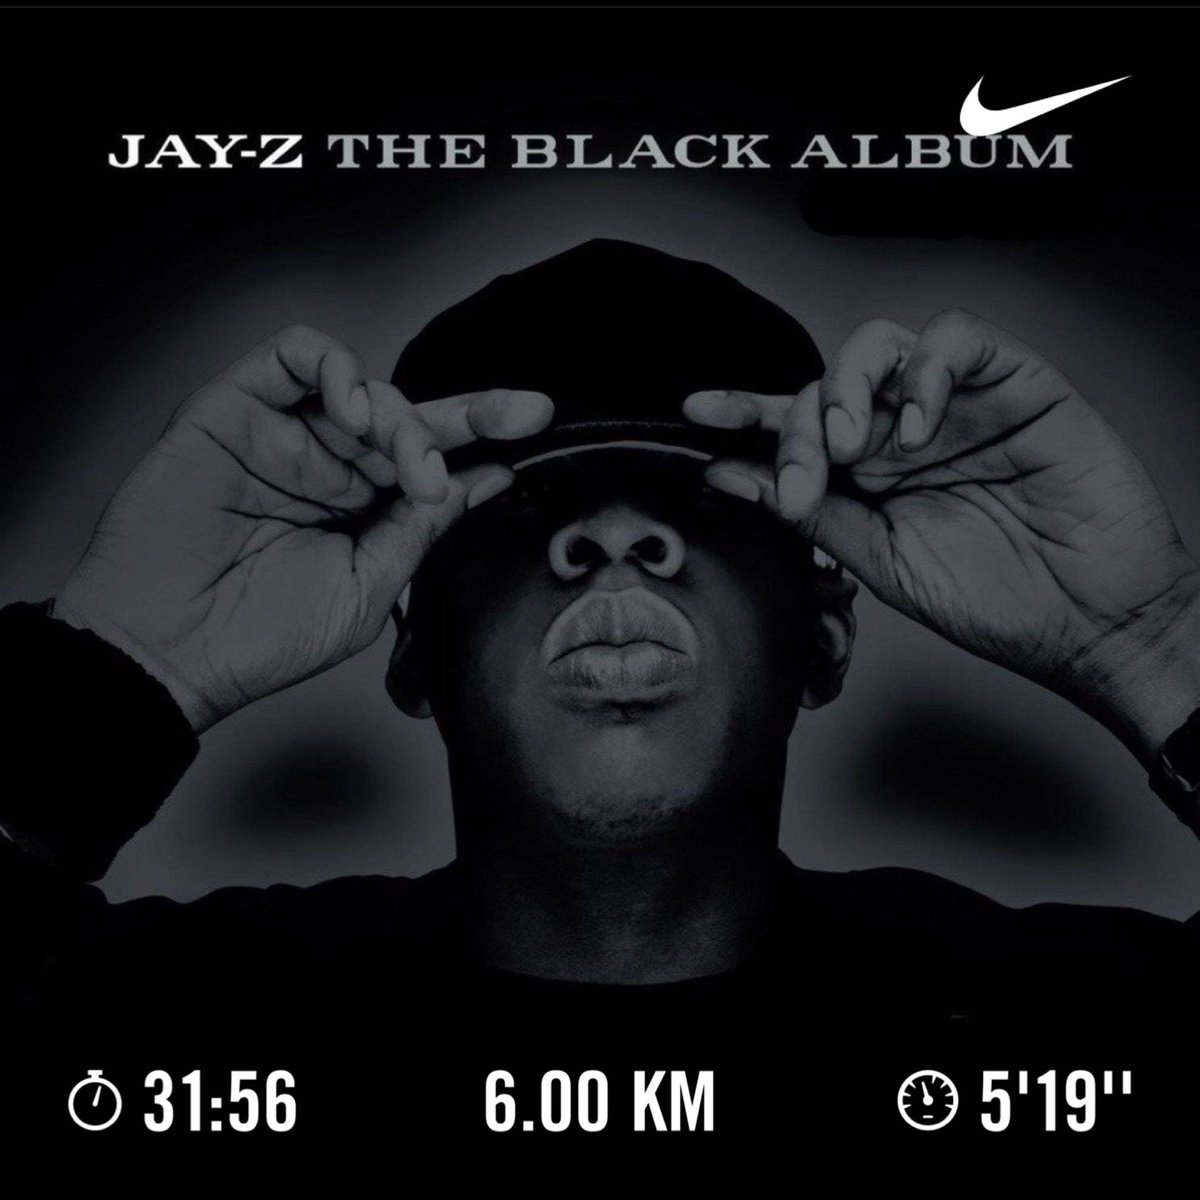 THE BLACK ALBUM // Jay-Z // 14 • 11 • 2003

#TheBlackAlbum #JayZ #Rap #NRC #EastCoastRap #Running #NikeRunning #ComeRunWithUs #JustDoIt #RunWithMusic #AlbumOfTheDay